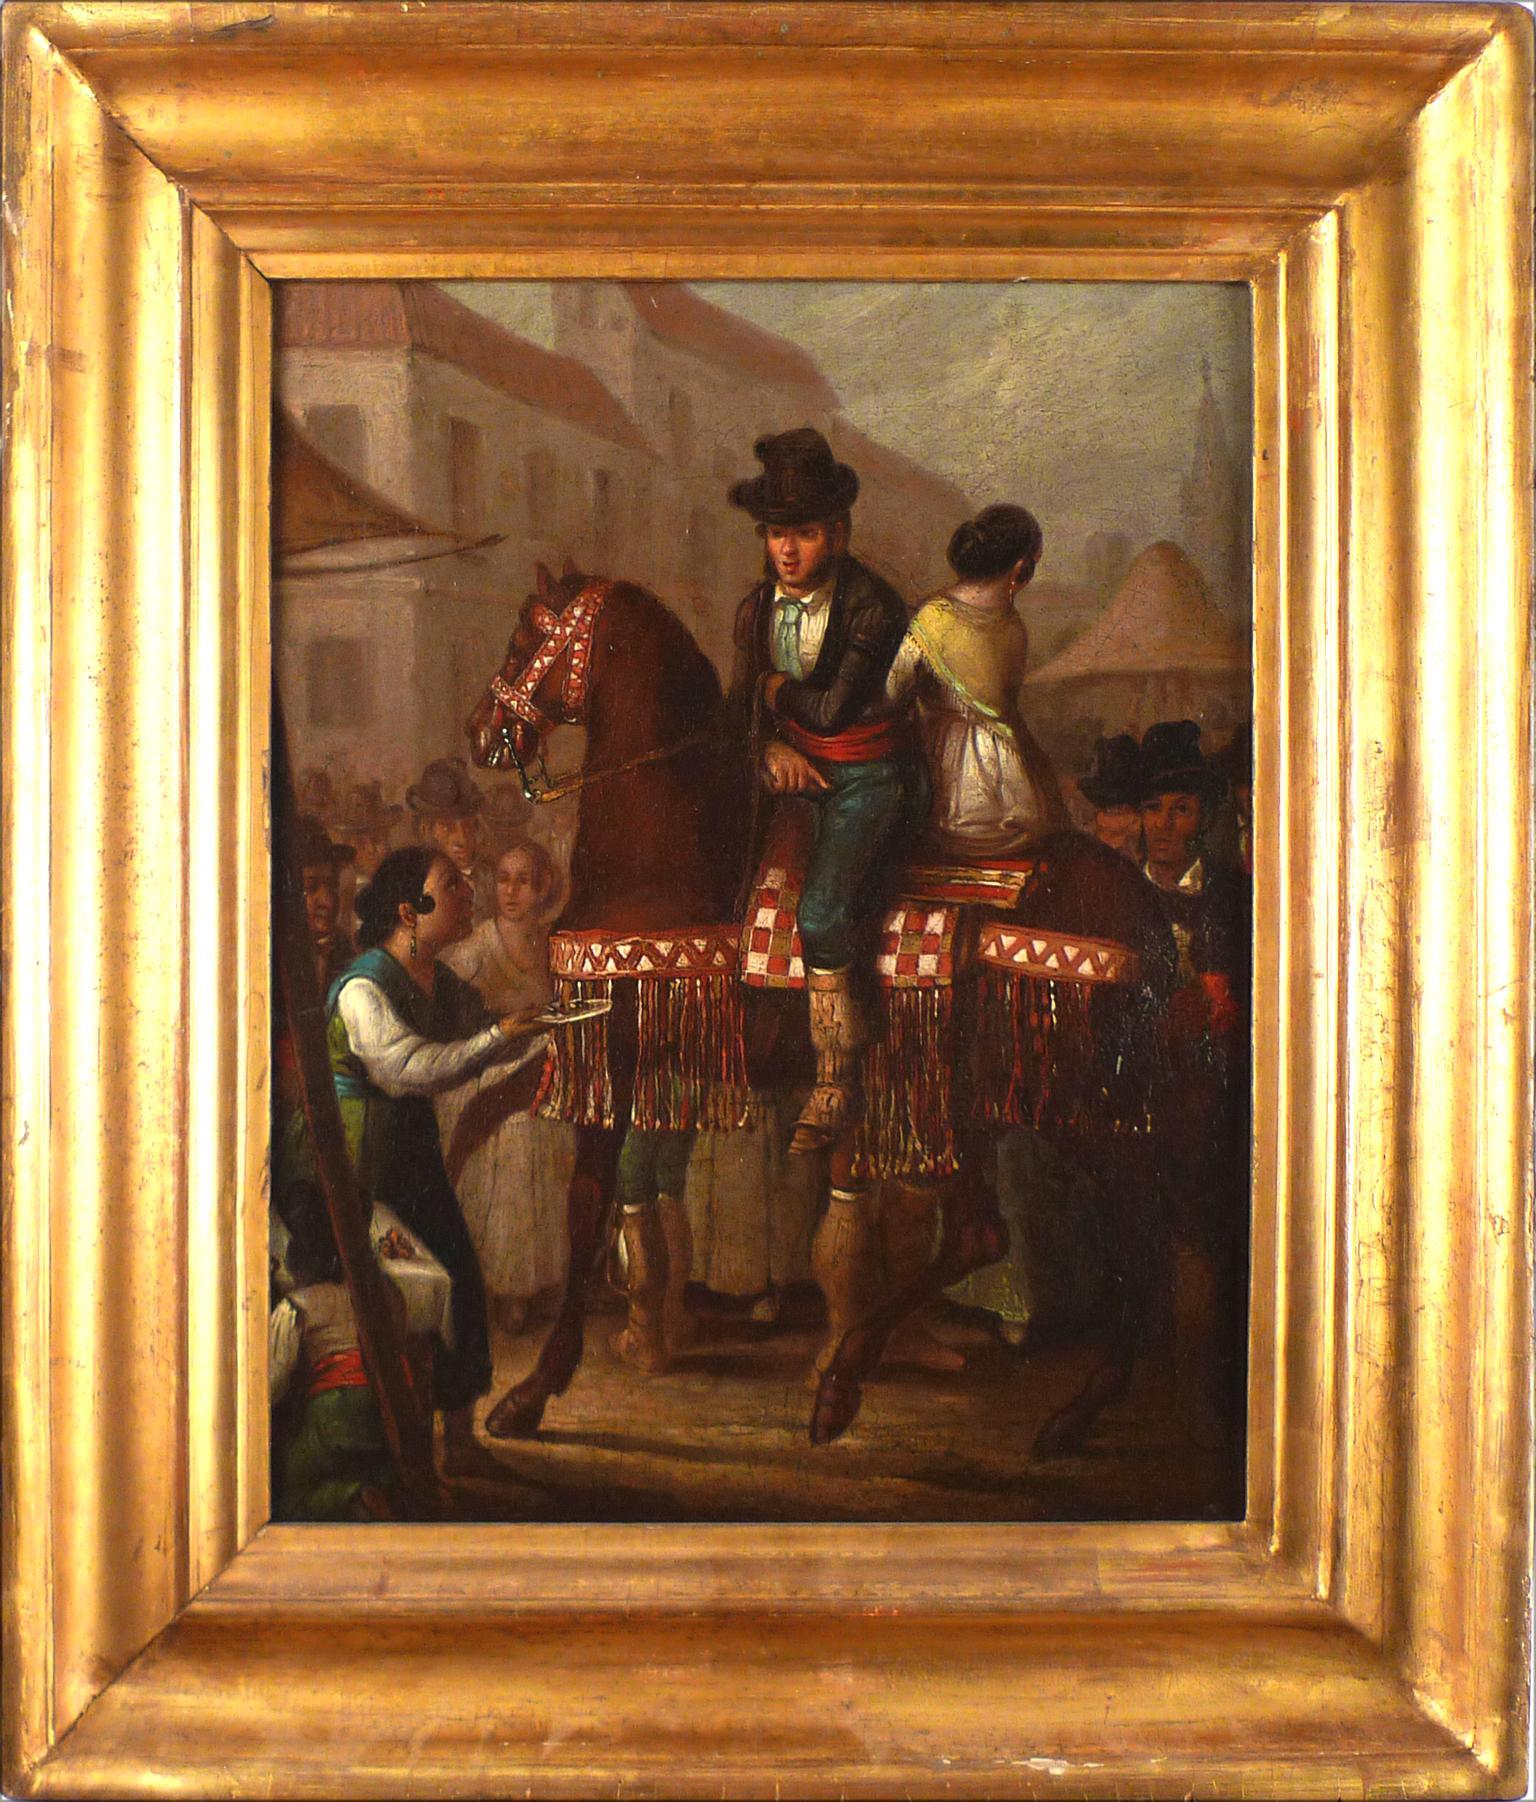 ÁNGEL MARÍA CORTELLINI
Spanisch, 1819 - 1887
OFRECIENDO UNA COPA
Öl auf Leinwand
13-1/4 x 11 Zoll (33,5 x 28 cm.)
Gerahmt: 17-1/4 x 15 (44 x 38 cm.)

Ángel María Cortellini. Sanlúcar de Barrameda (Cádiz), 27.09.1819 - Madrid, 1887. Malerin.

Ángel